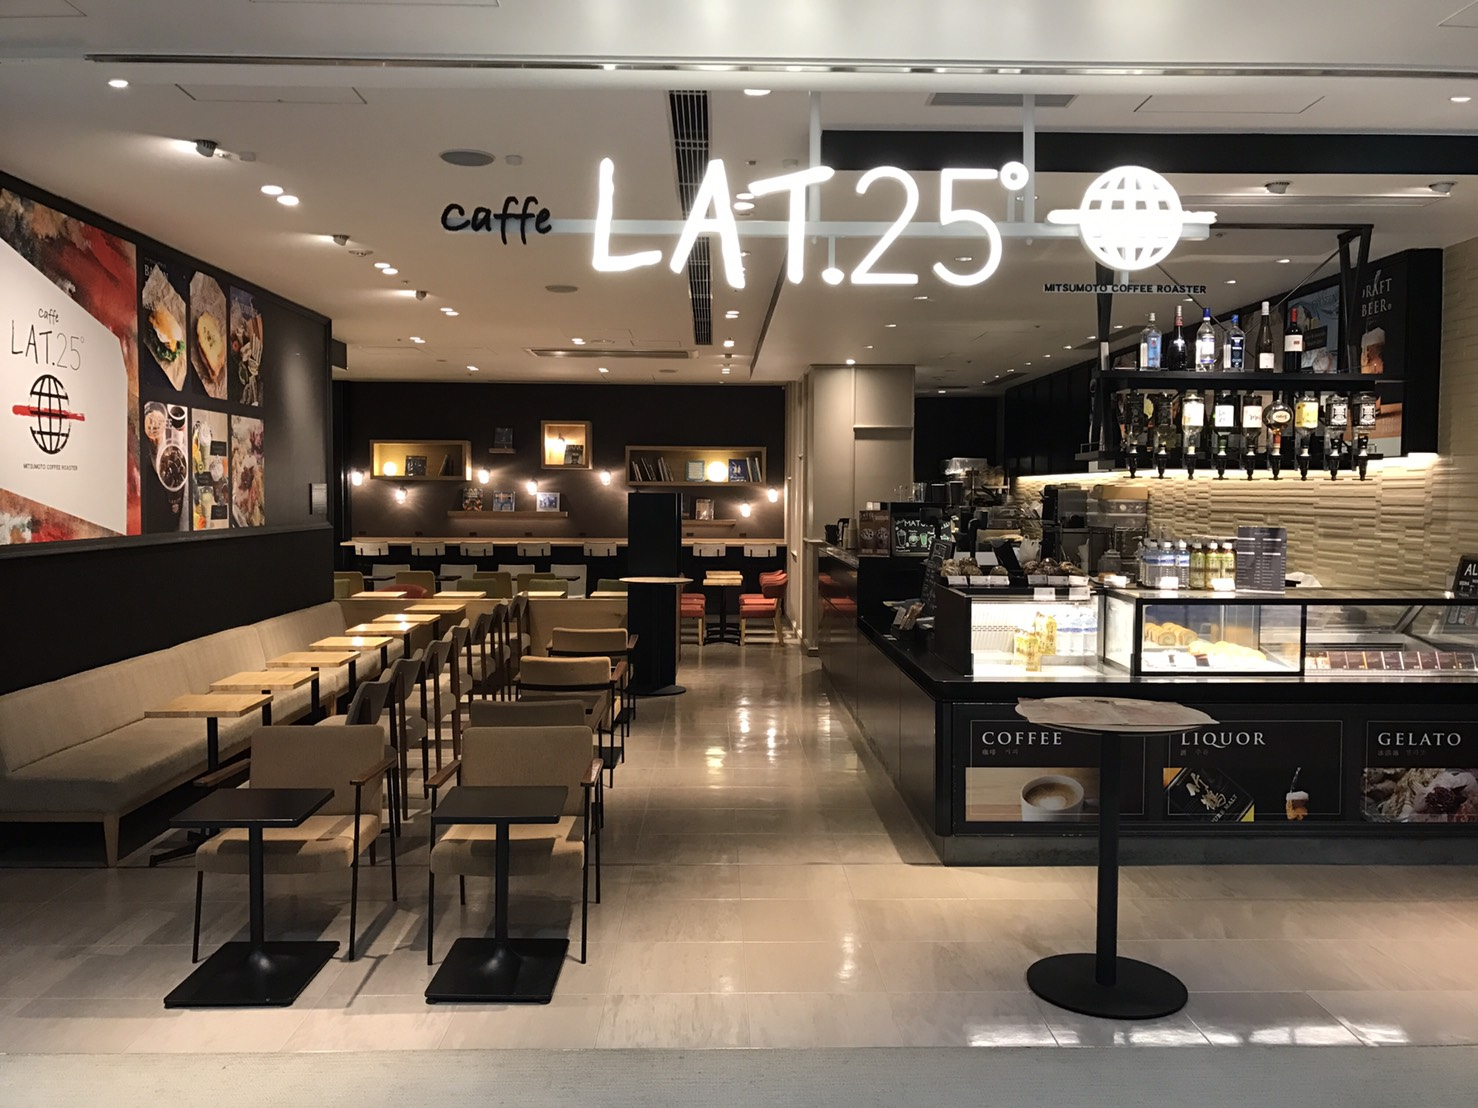 caffe LAT.25° 成田机场第3航站楼3F店的店铺图像